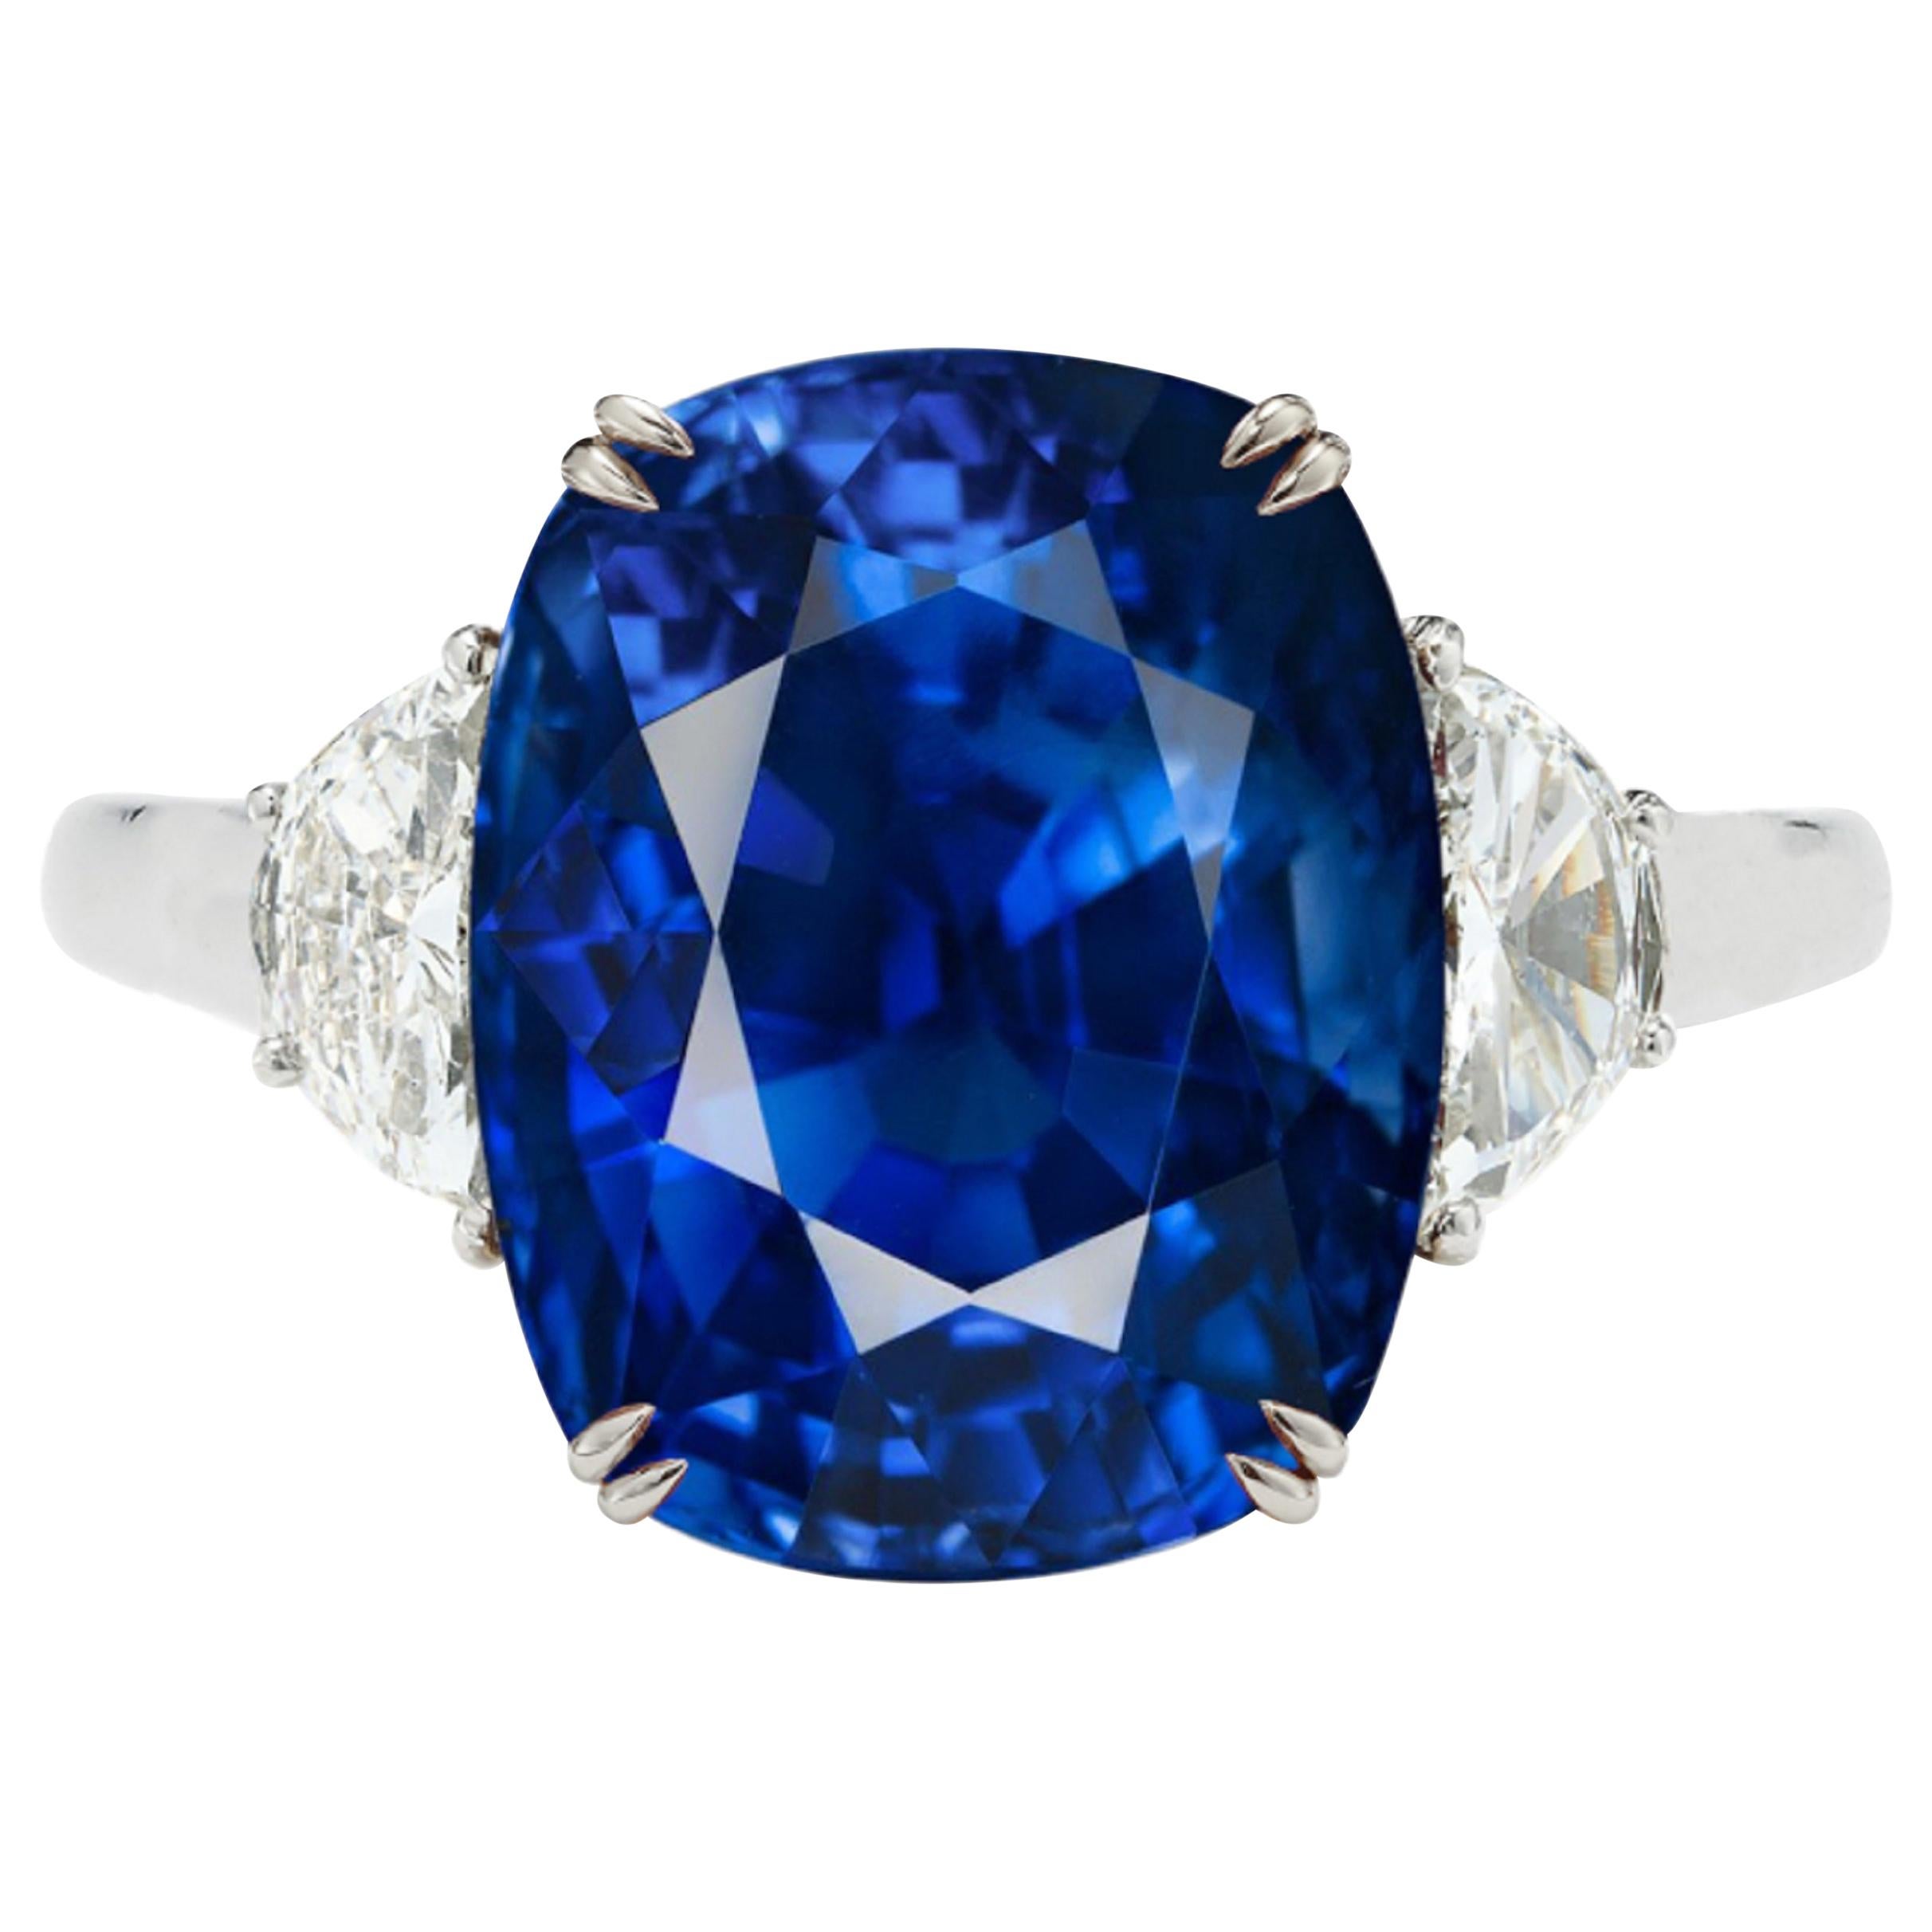 GIA Certied 6.70 Carat Vivid Intense Blue KASHMIR Sapphire Ring